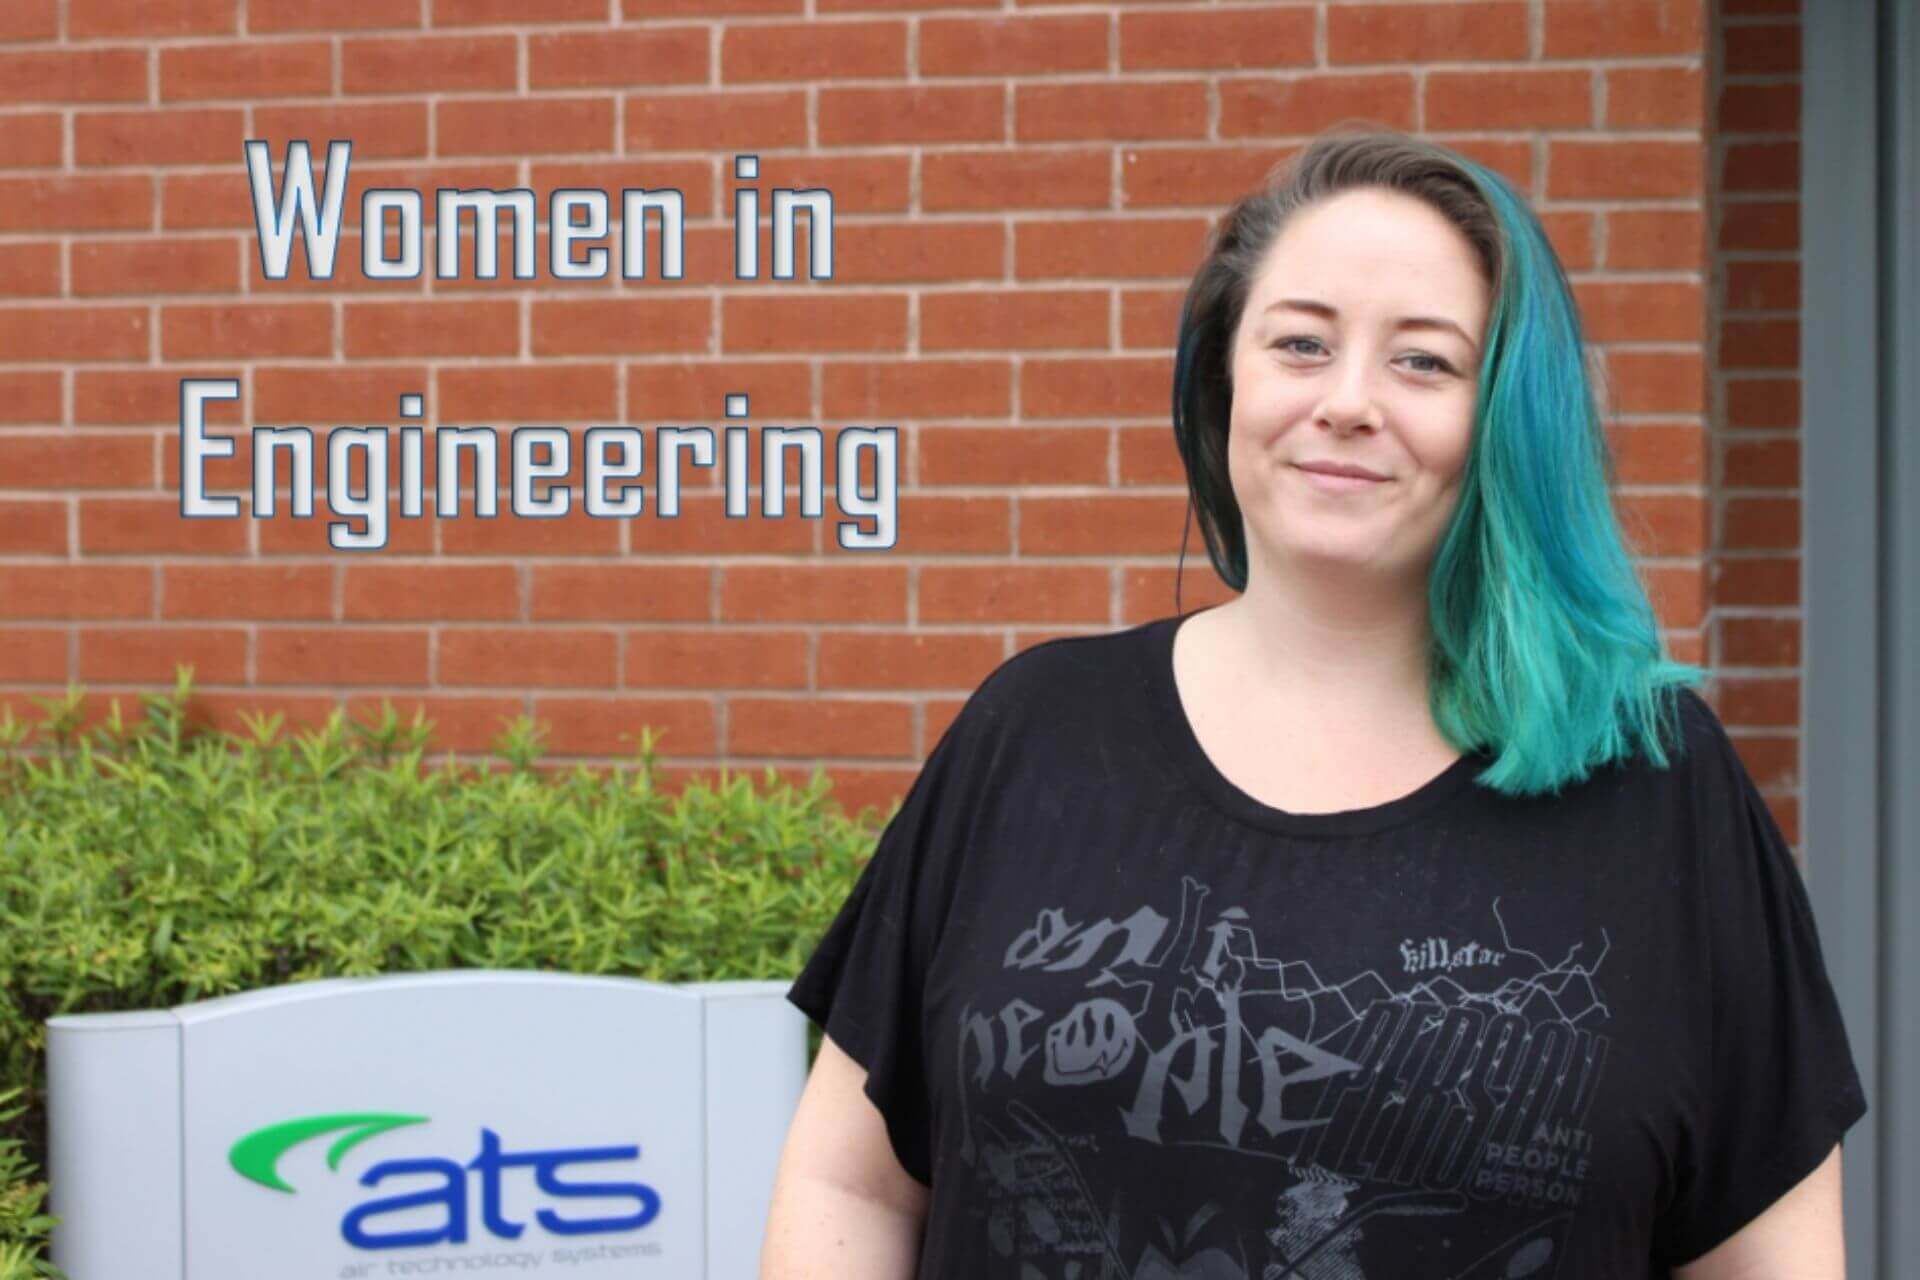 Odour control design engineer interviewed for Women in Engineering